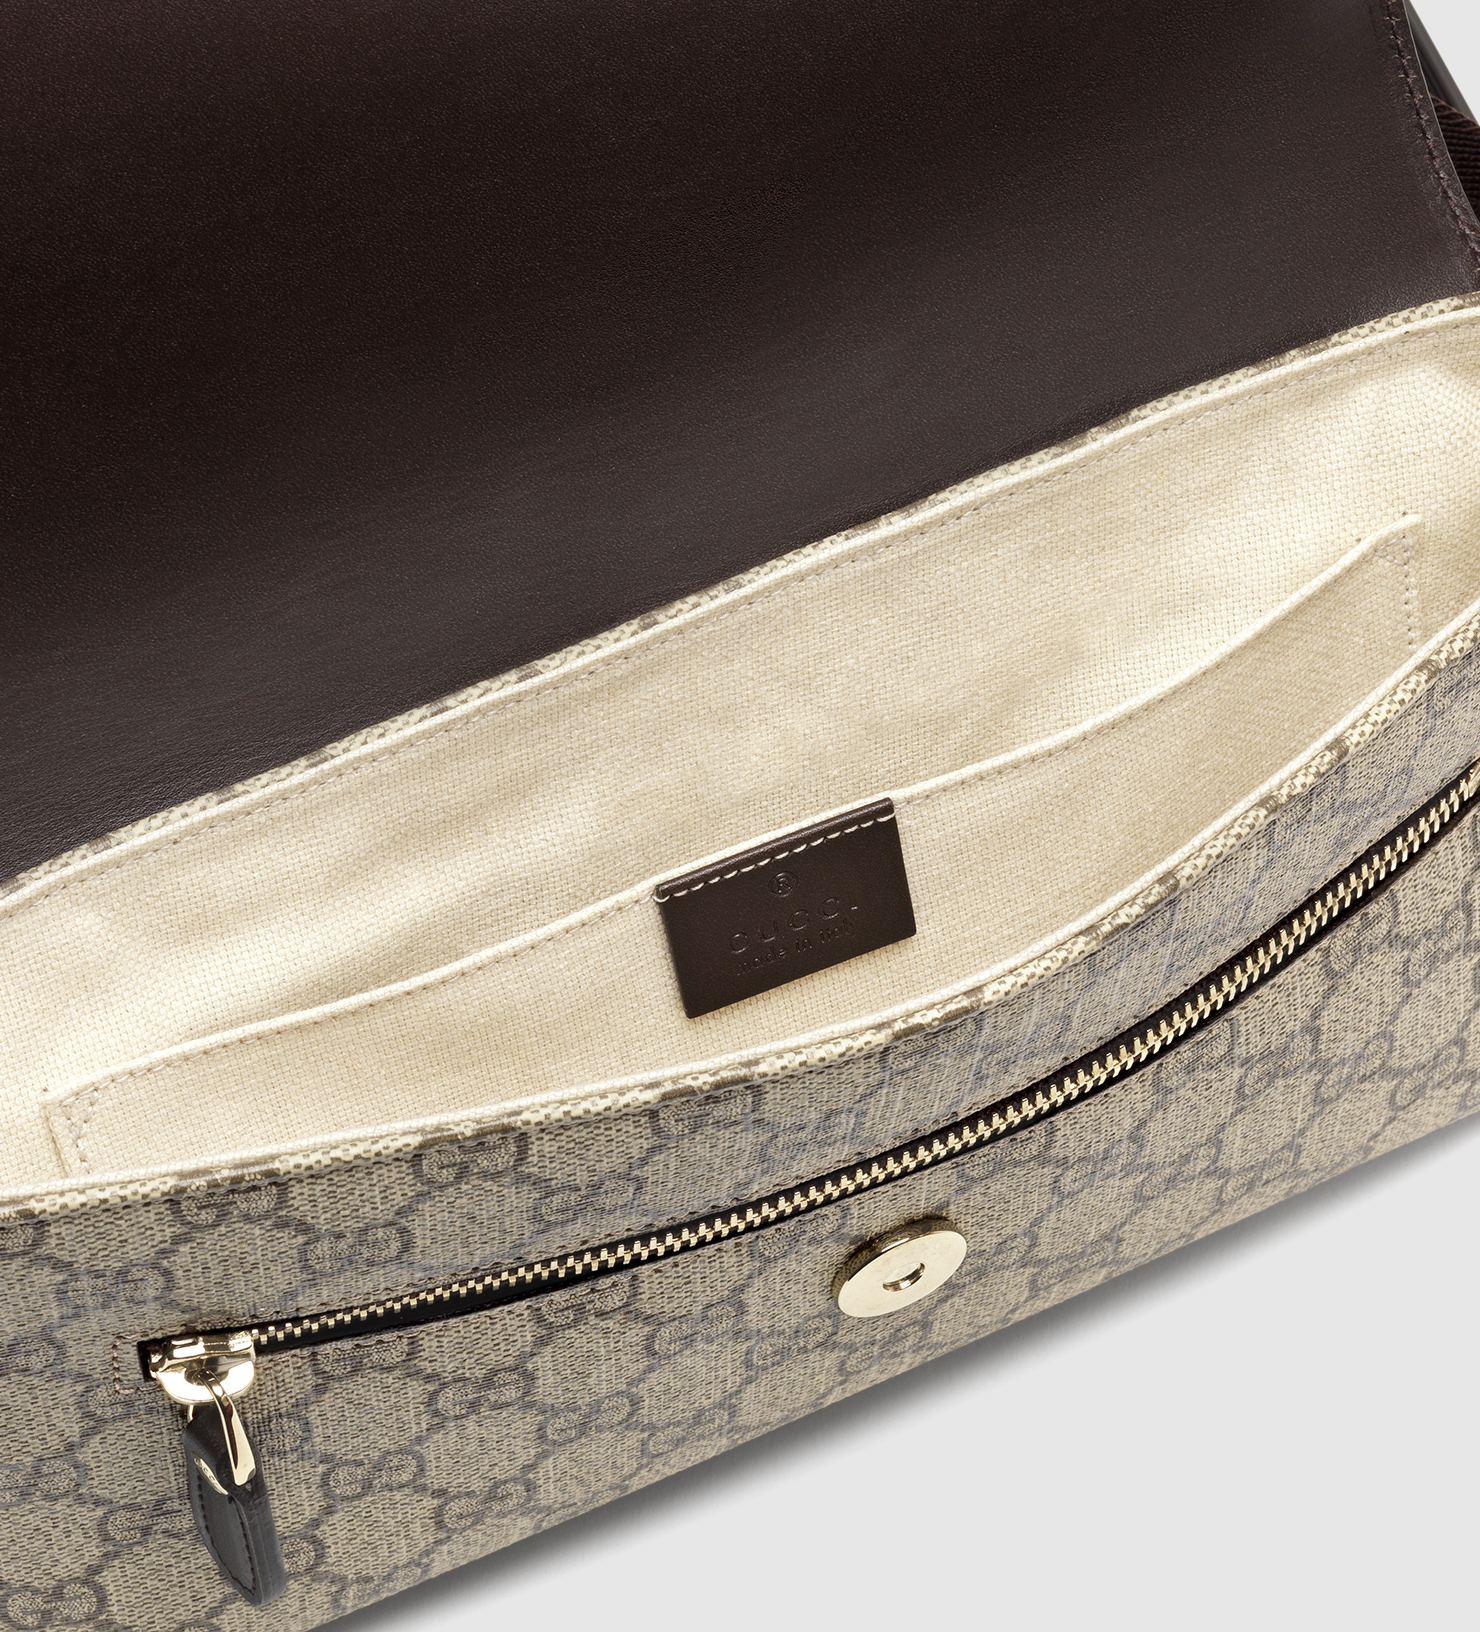 Gucci Gg Supreme Canvas Belt Bag in Brown - Lyst